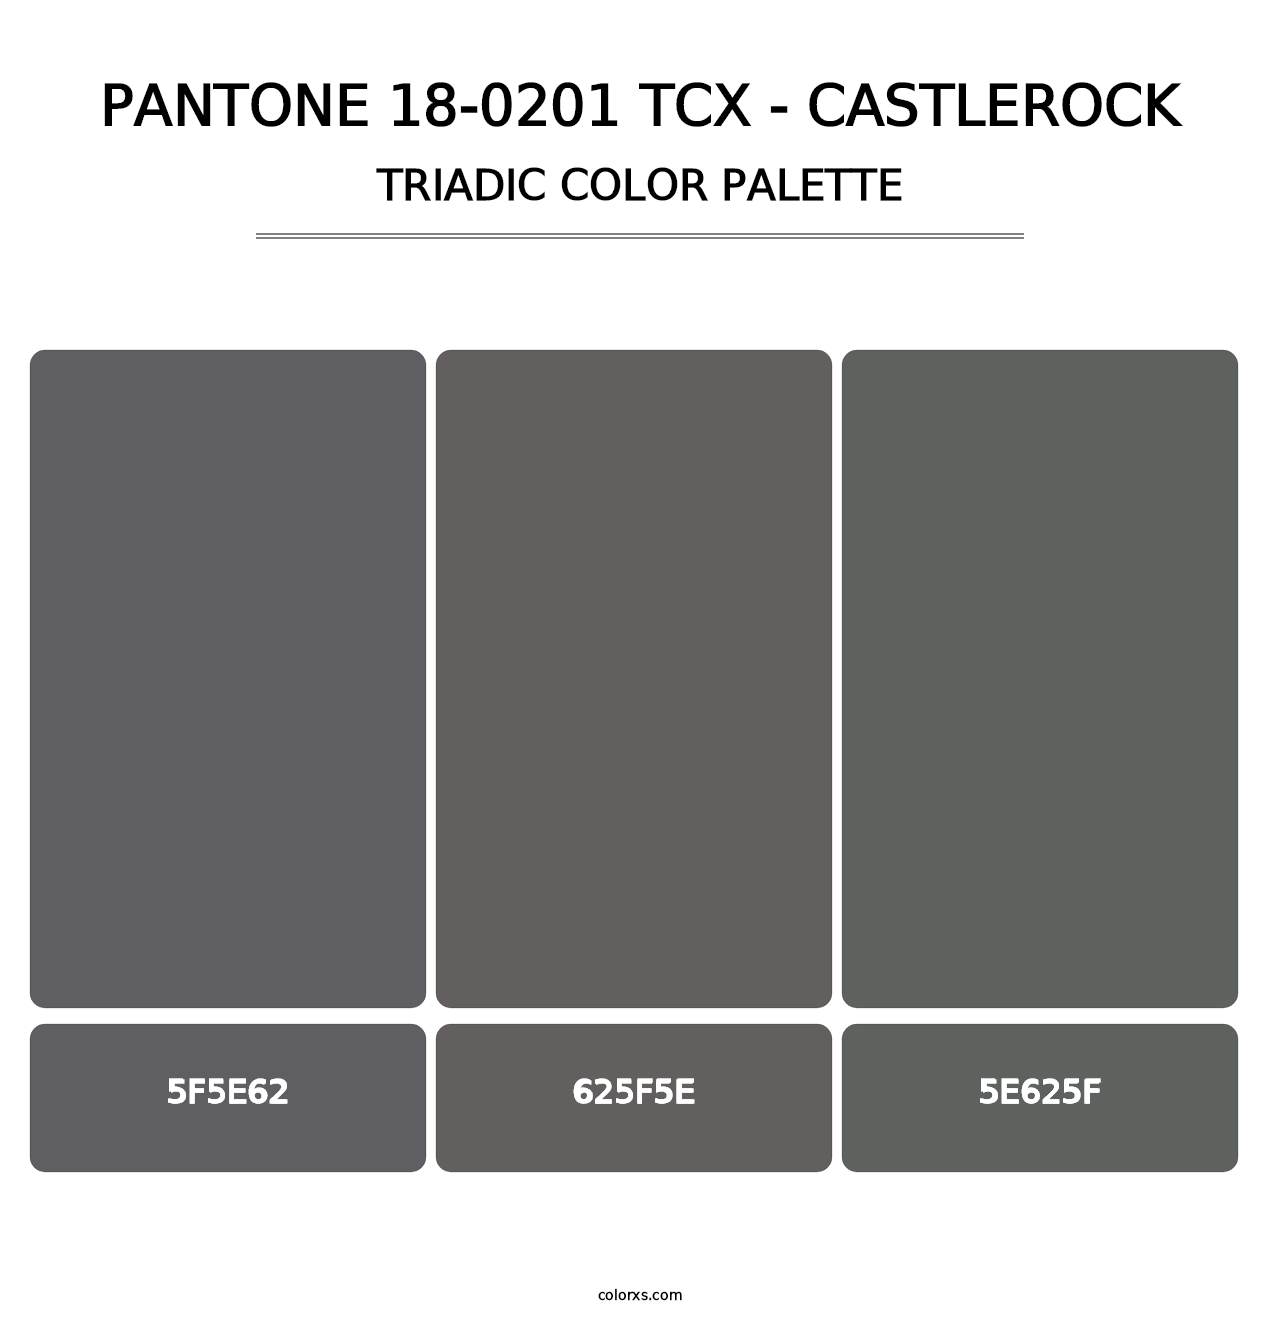 PANTONE 18-0201 TCX - Castlerock - Triadic Color Palette